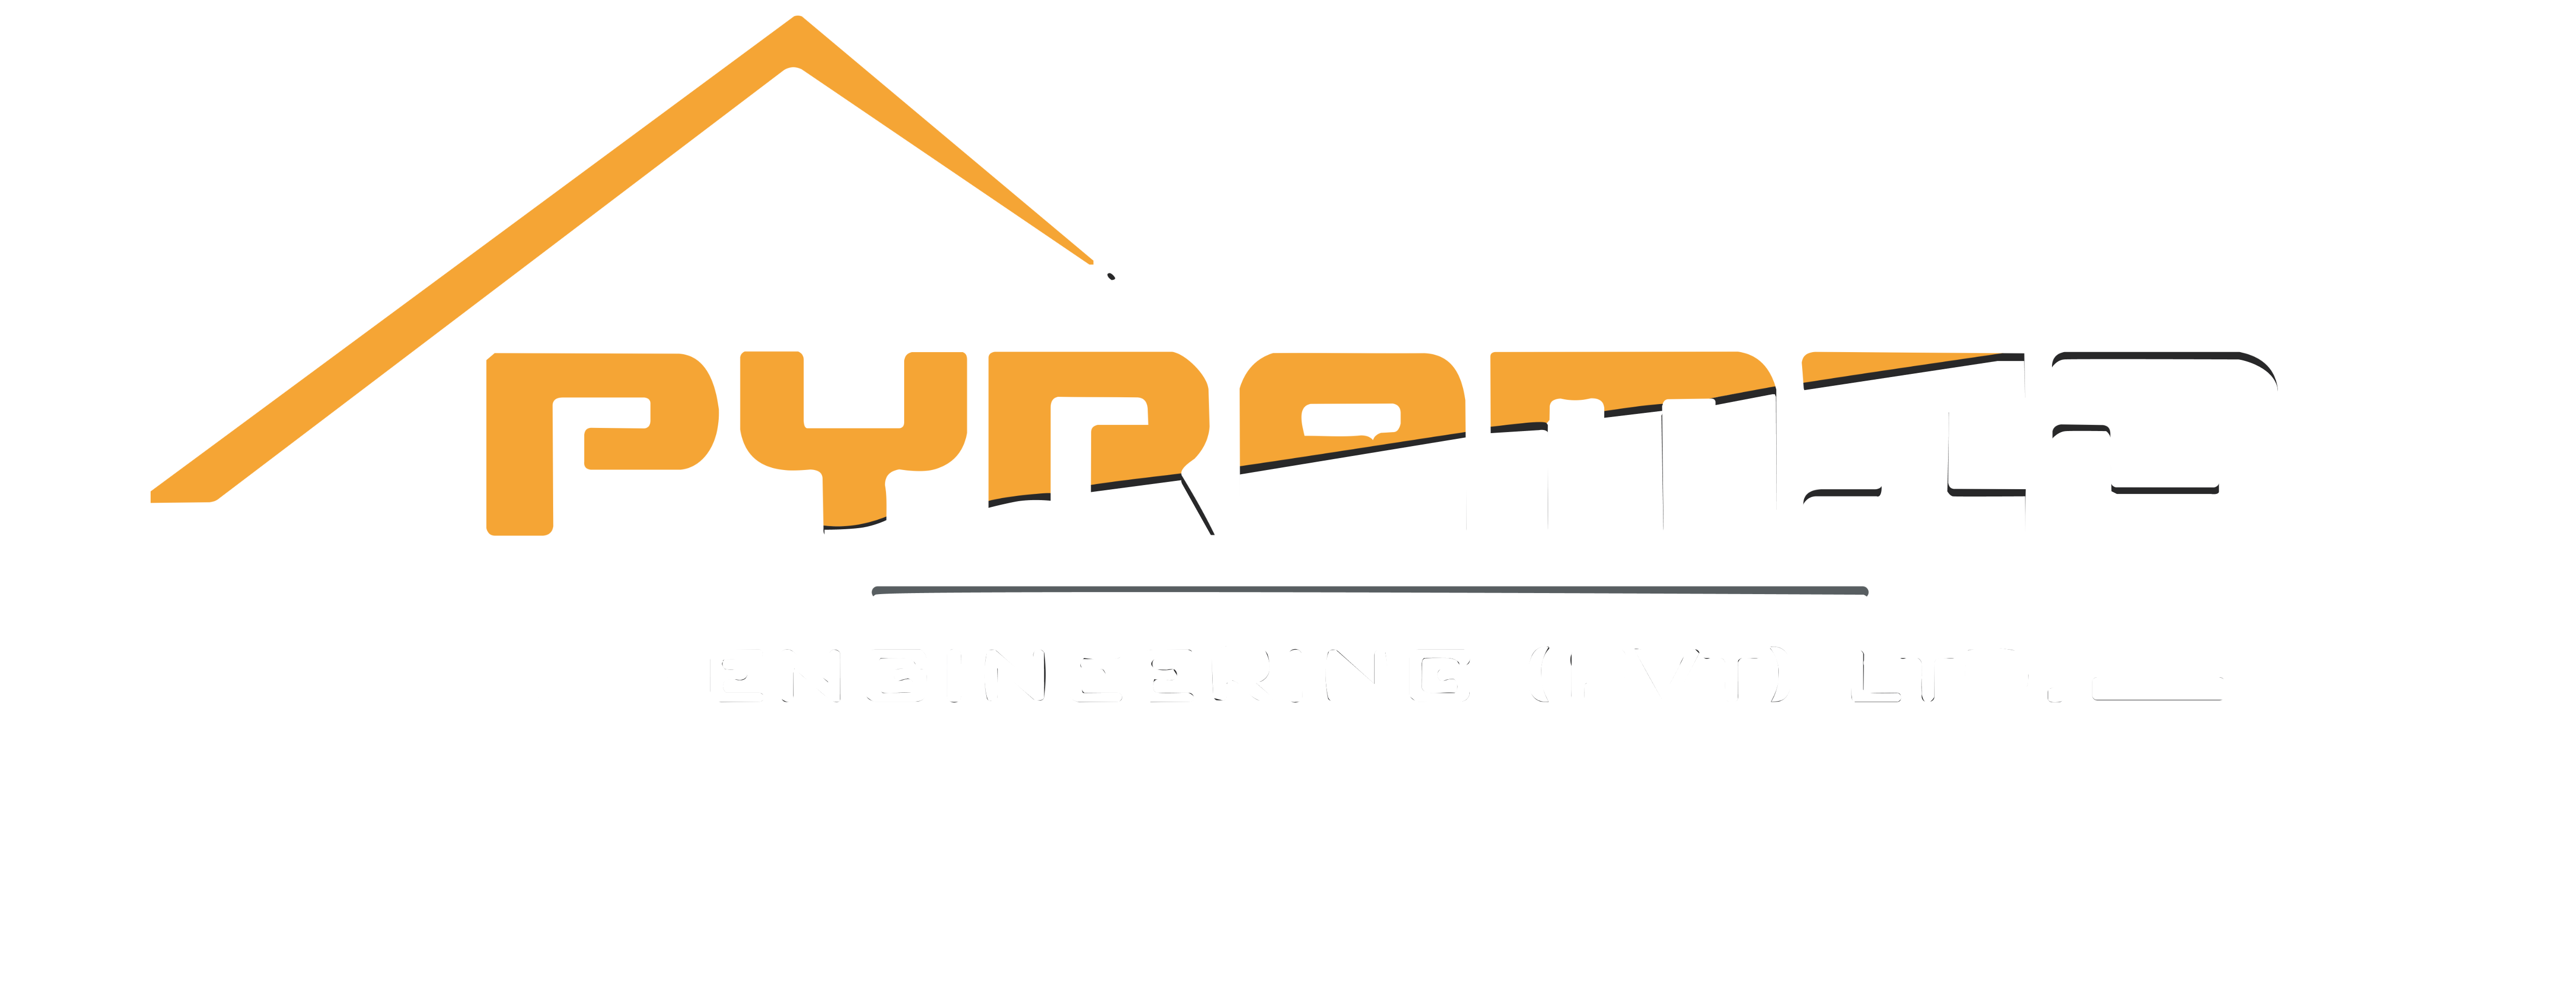 pyramid engineering logo